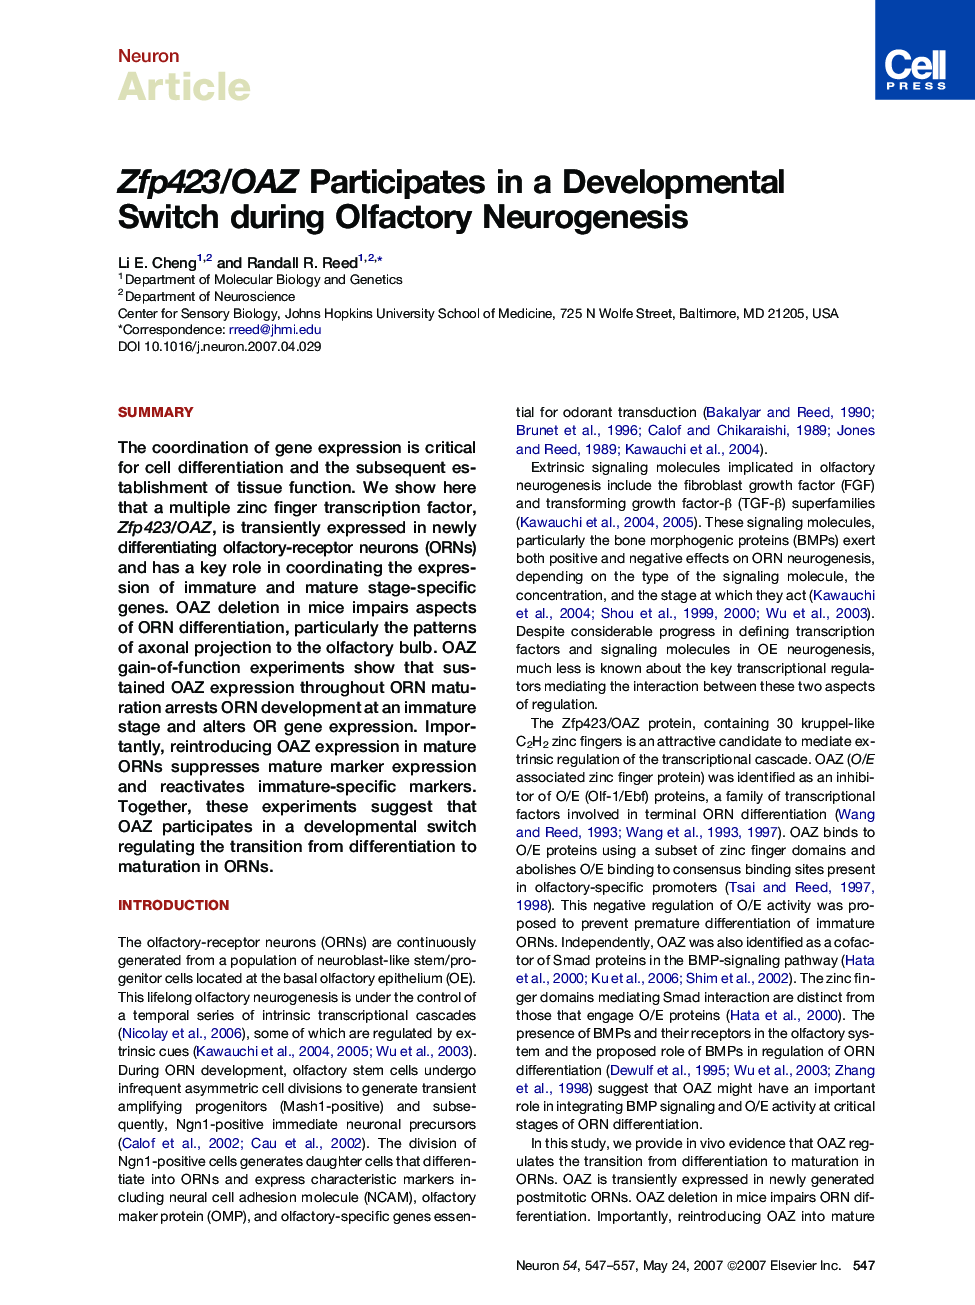 Zfp423/OAZ Participates in a Developmental Switch during Olfactory Neurogenesis